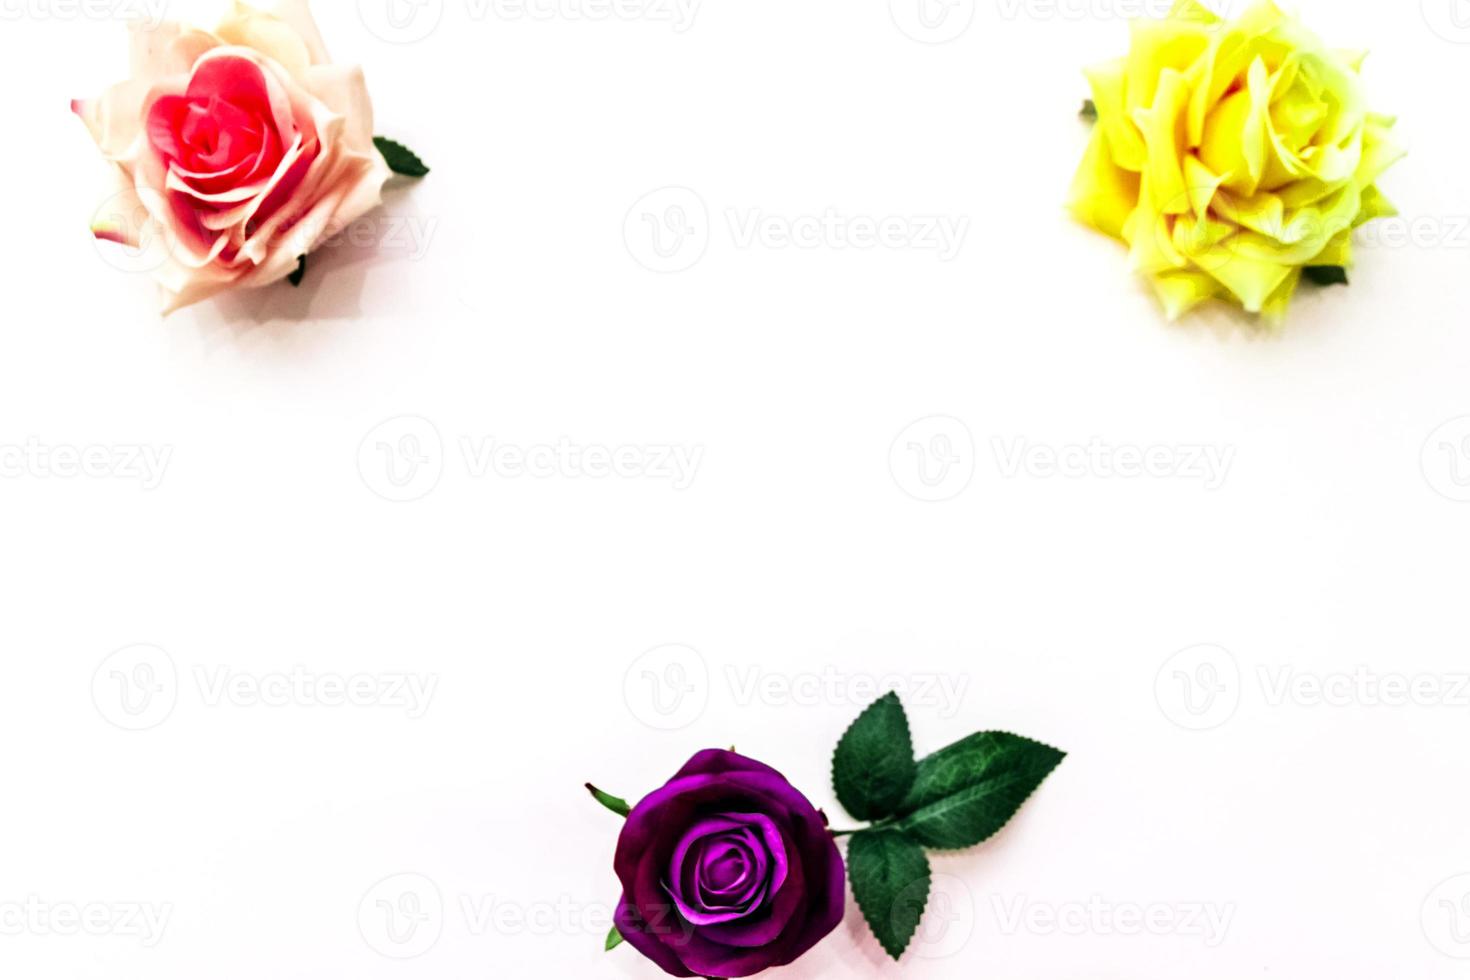 geel in paarse rozen op witte achtergrond foto